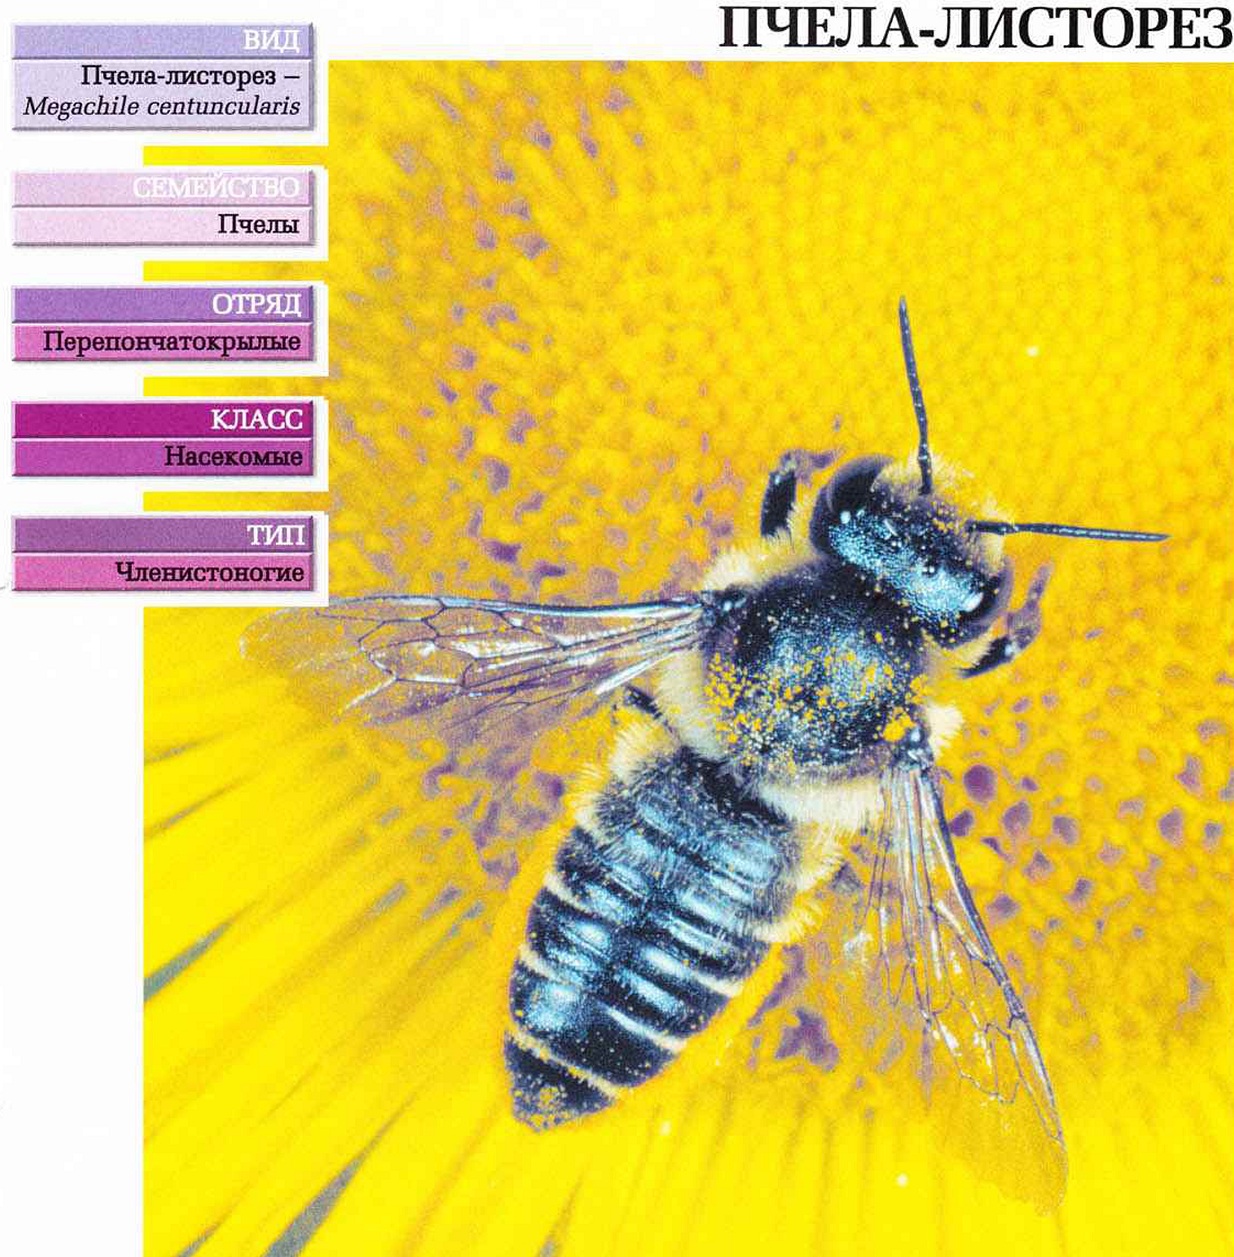 Систематика (научная классификация) пчелы-листореза. Megachile centuncularis.